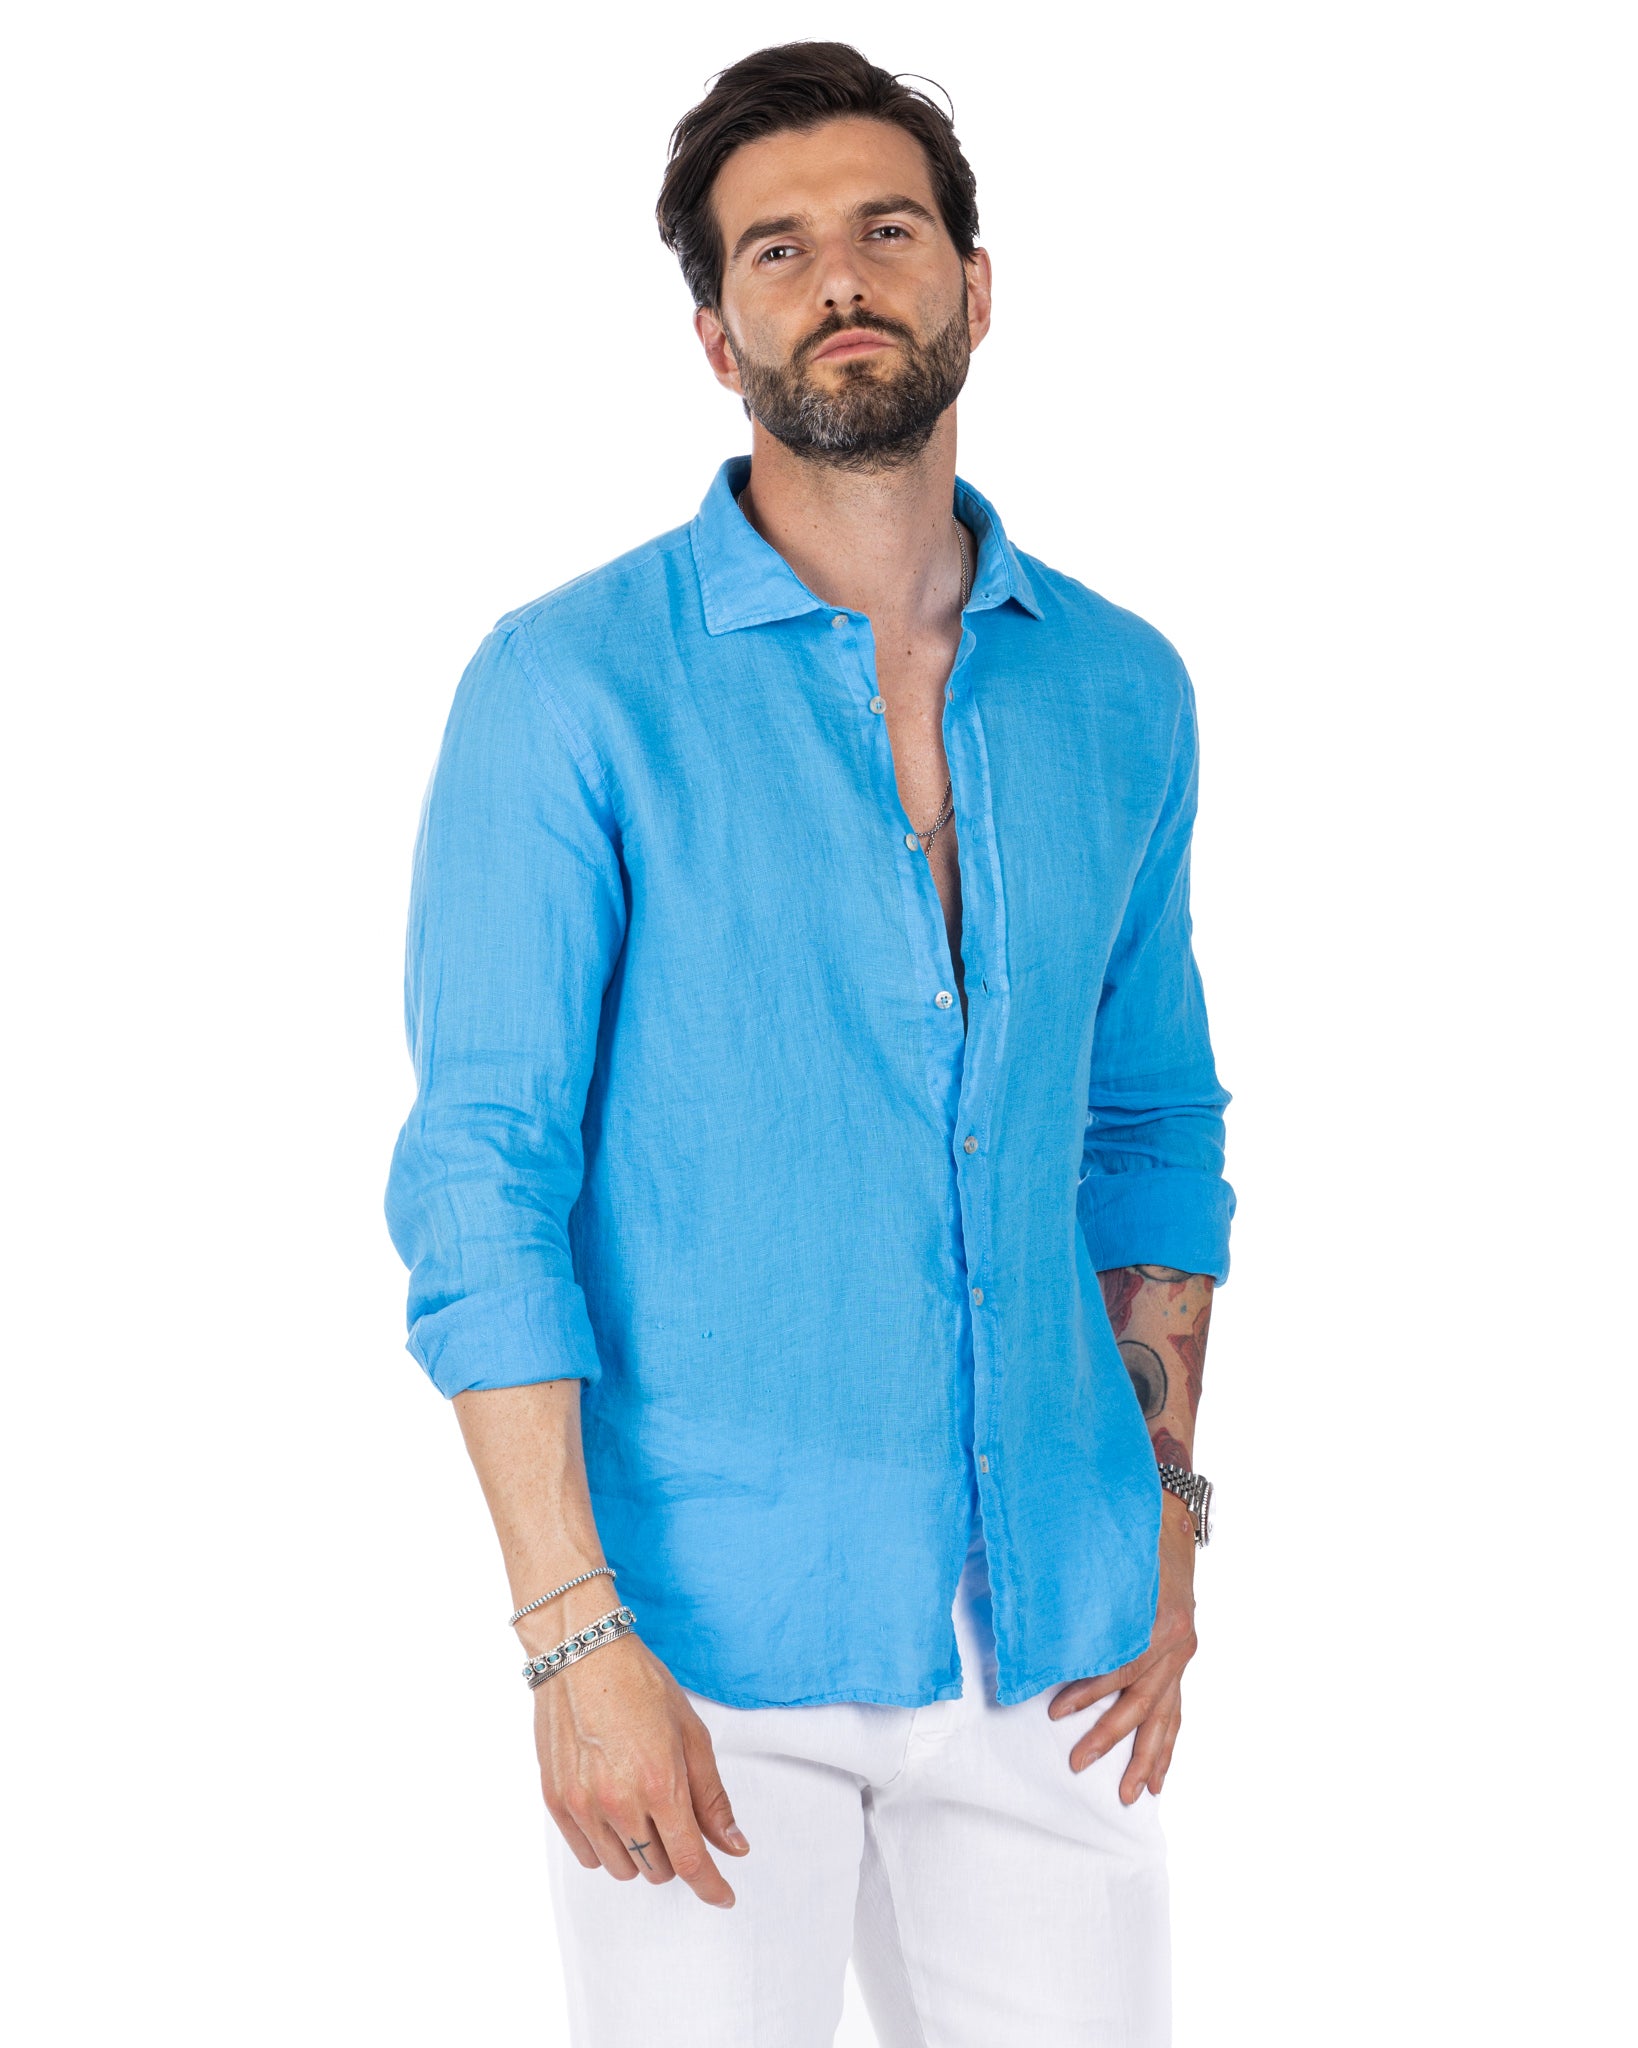 Montecarlo - chemise pur lin turquoise